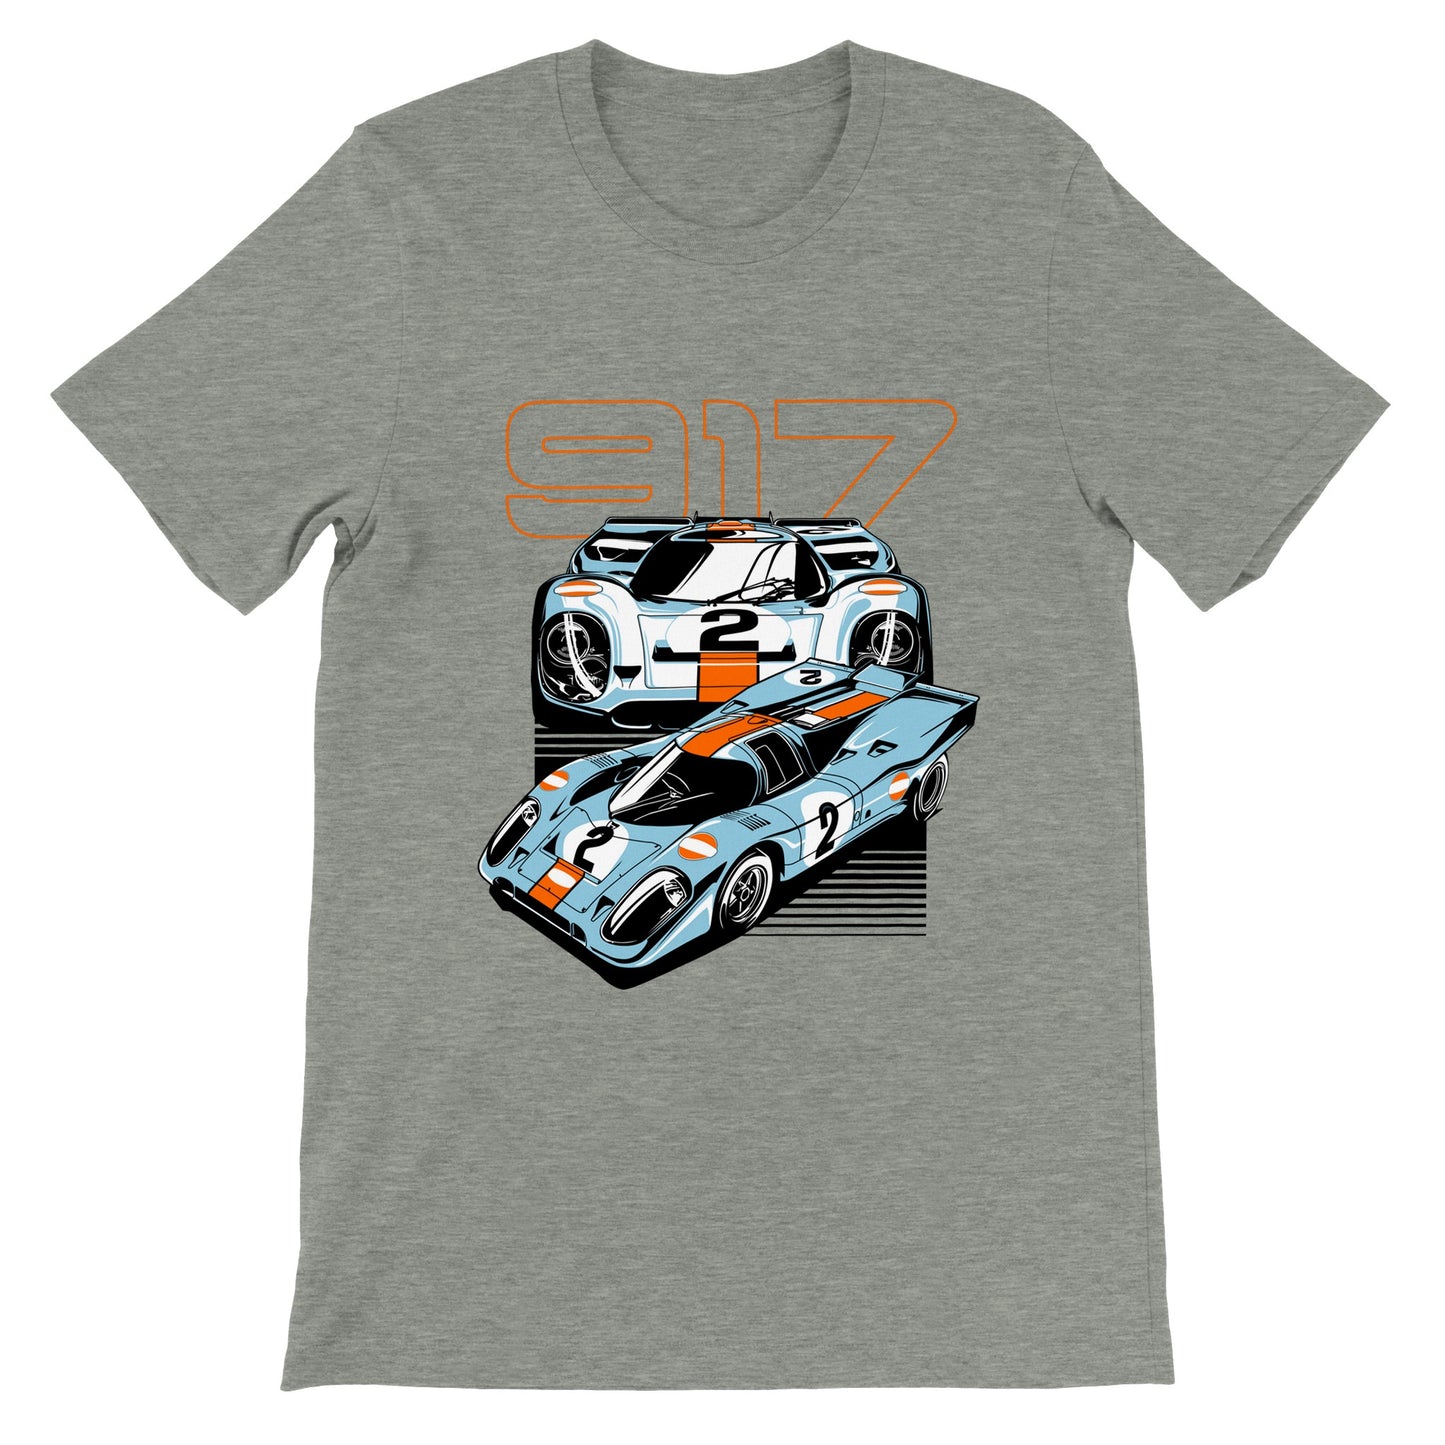 Car T-shirt - The Super Car 917 - Artwork - Premium Unisex T-shirt